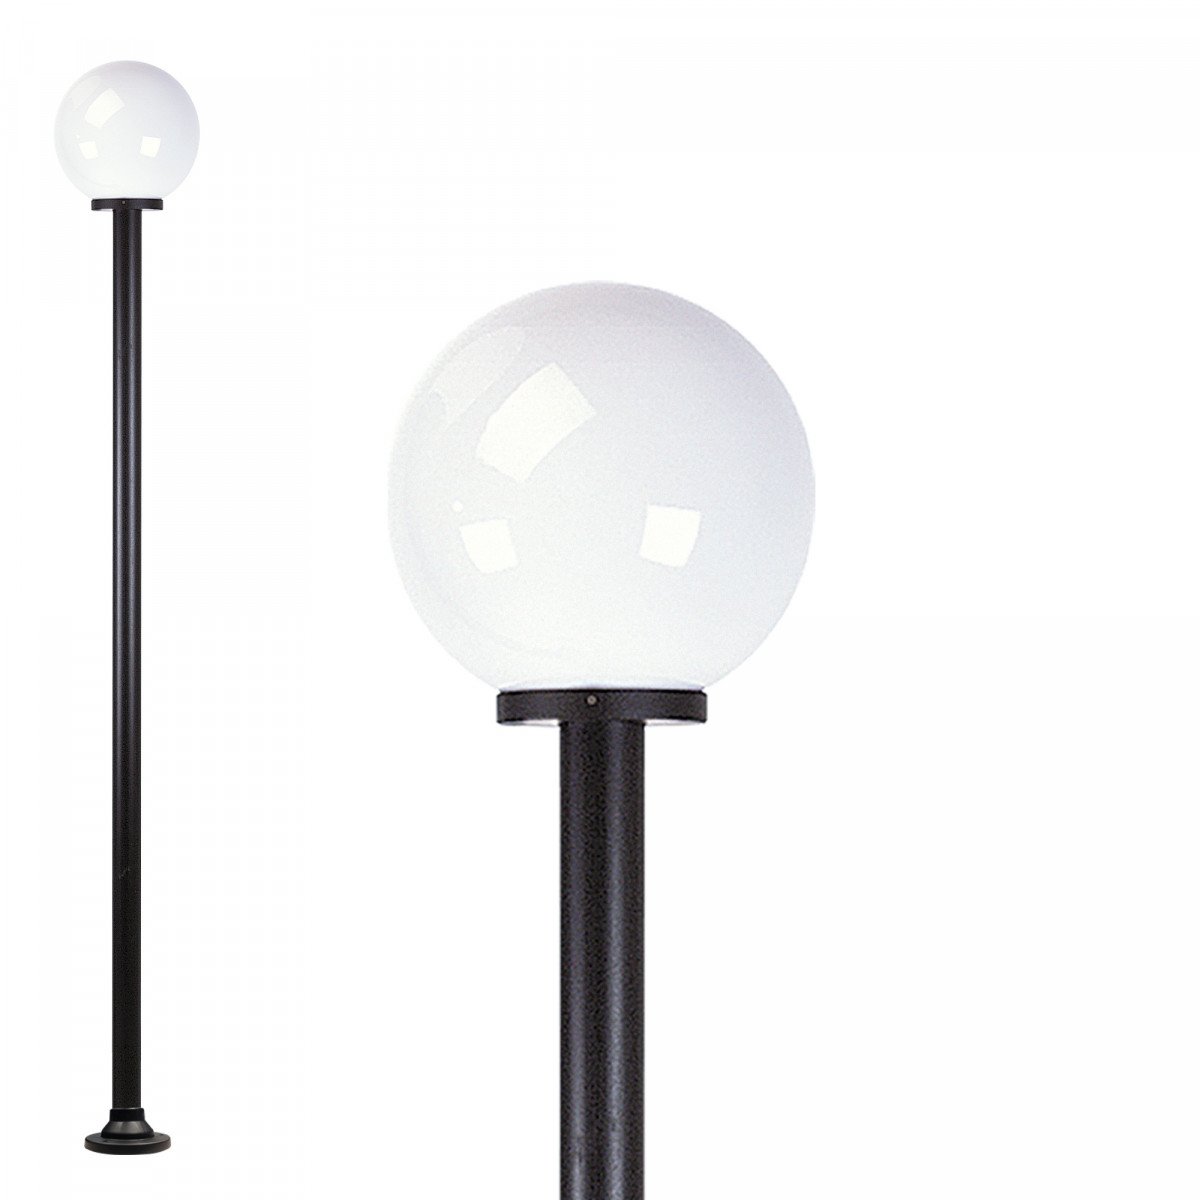 Globe lighting post 200r 